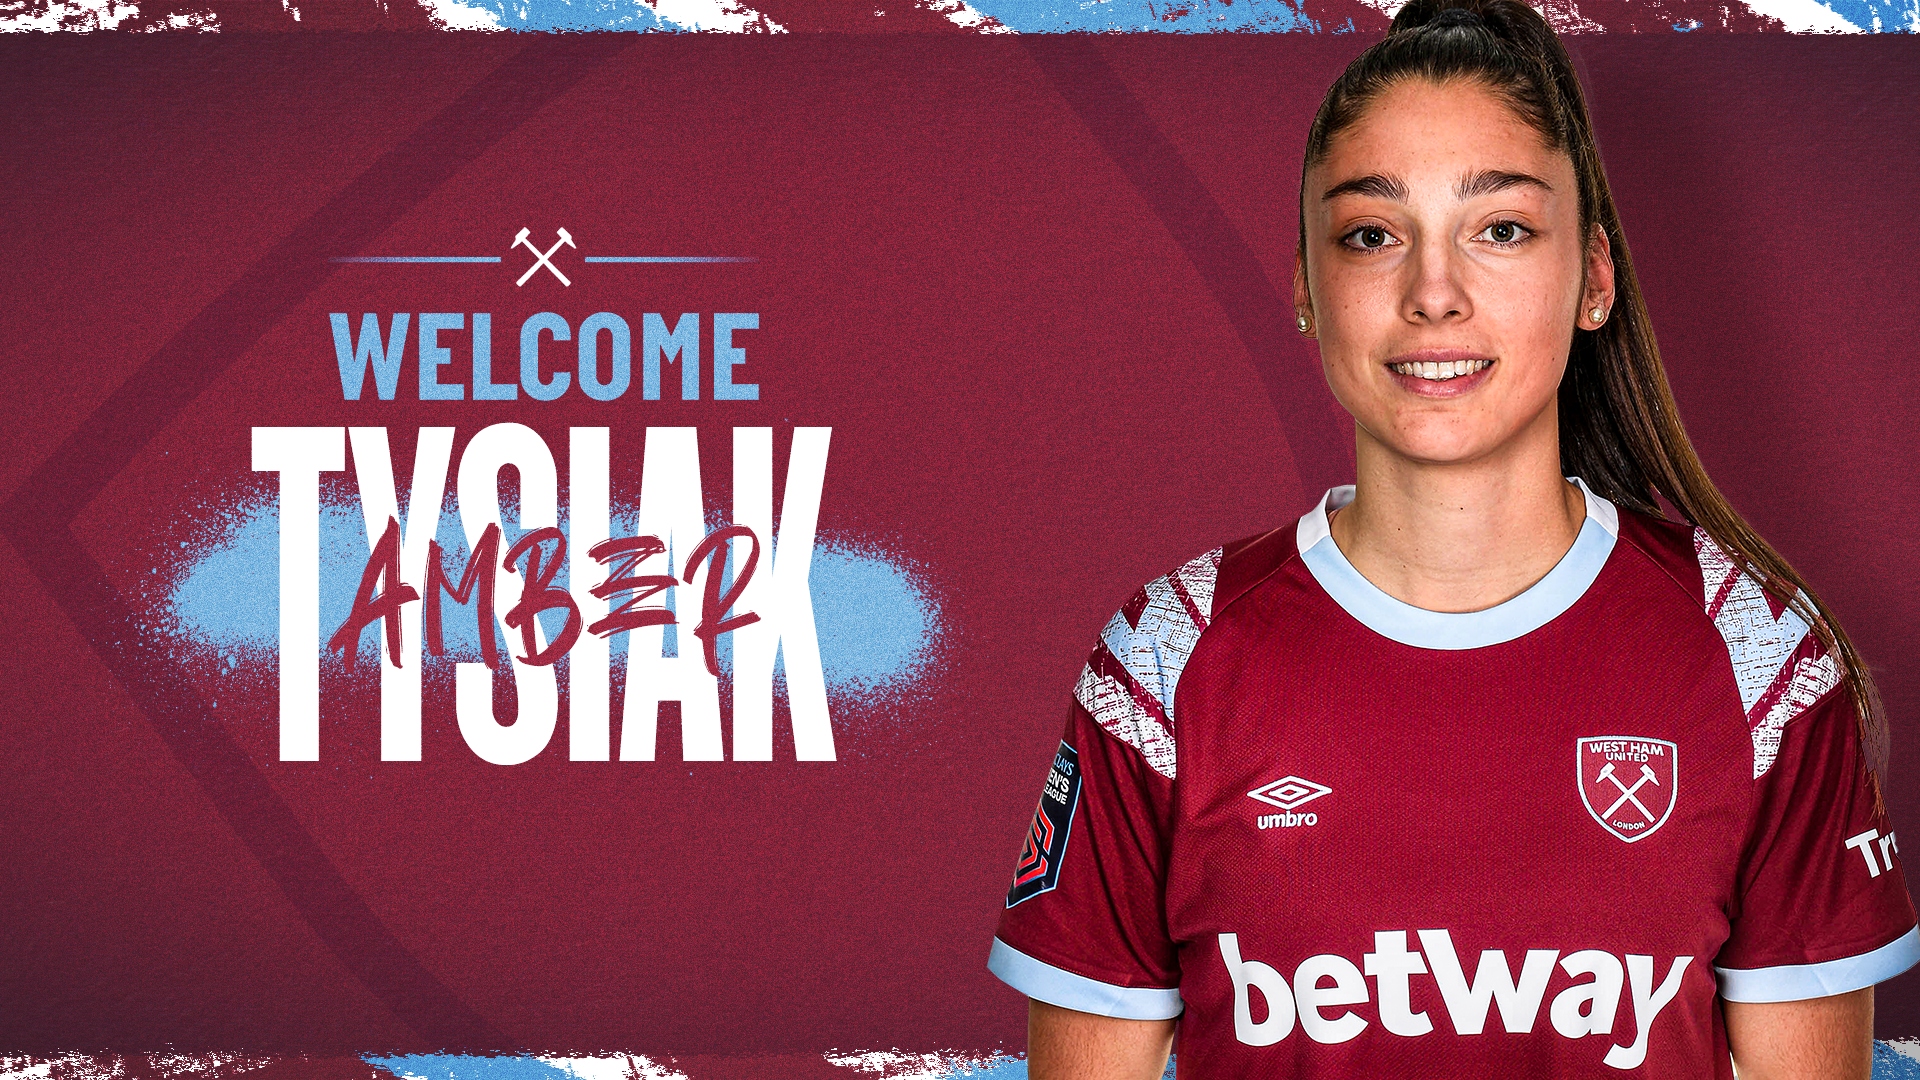 Amber Tysiak joins West Ham United Women